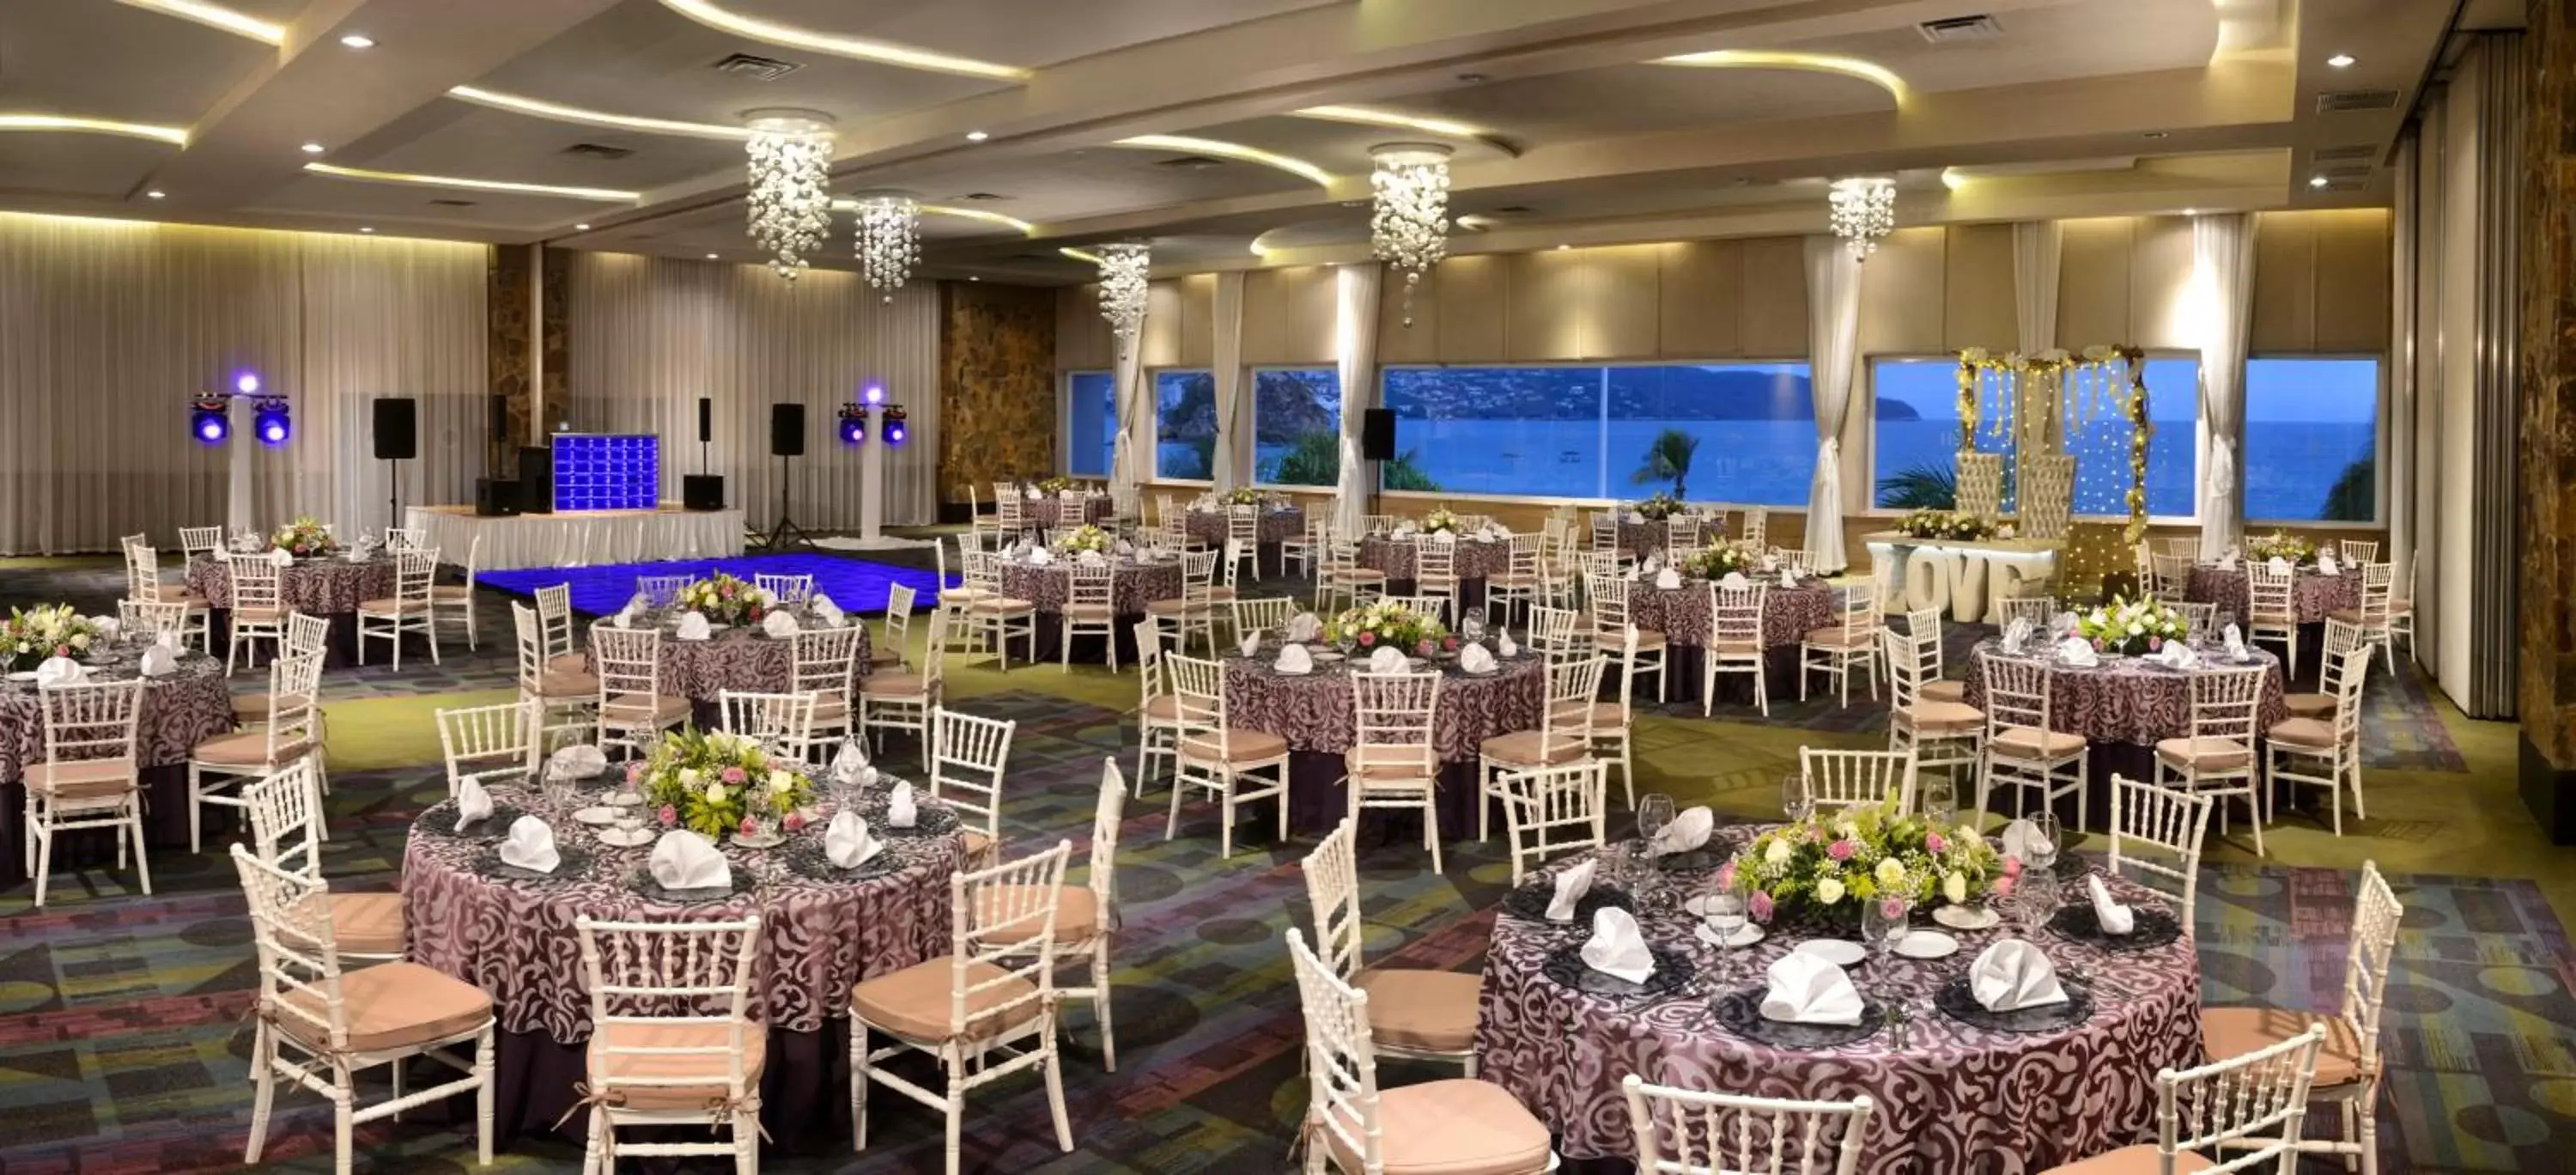 Banquet/Function facilities, Banquet Facilities in HS HOTSSON Smart Acapulco